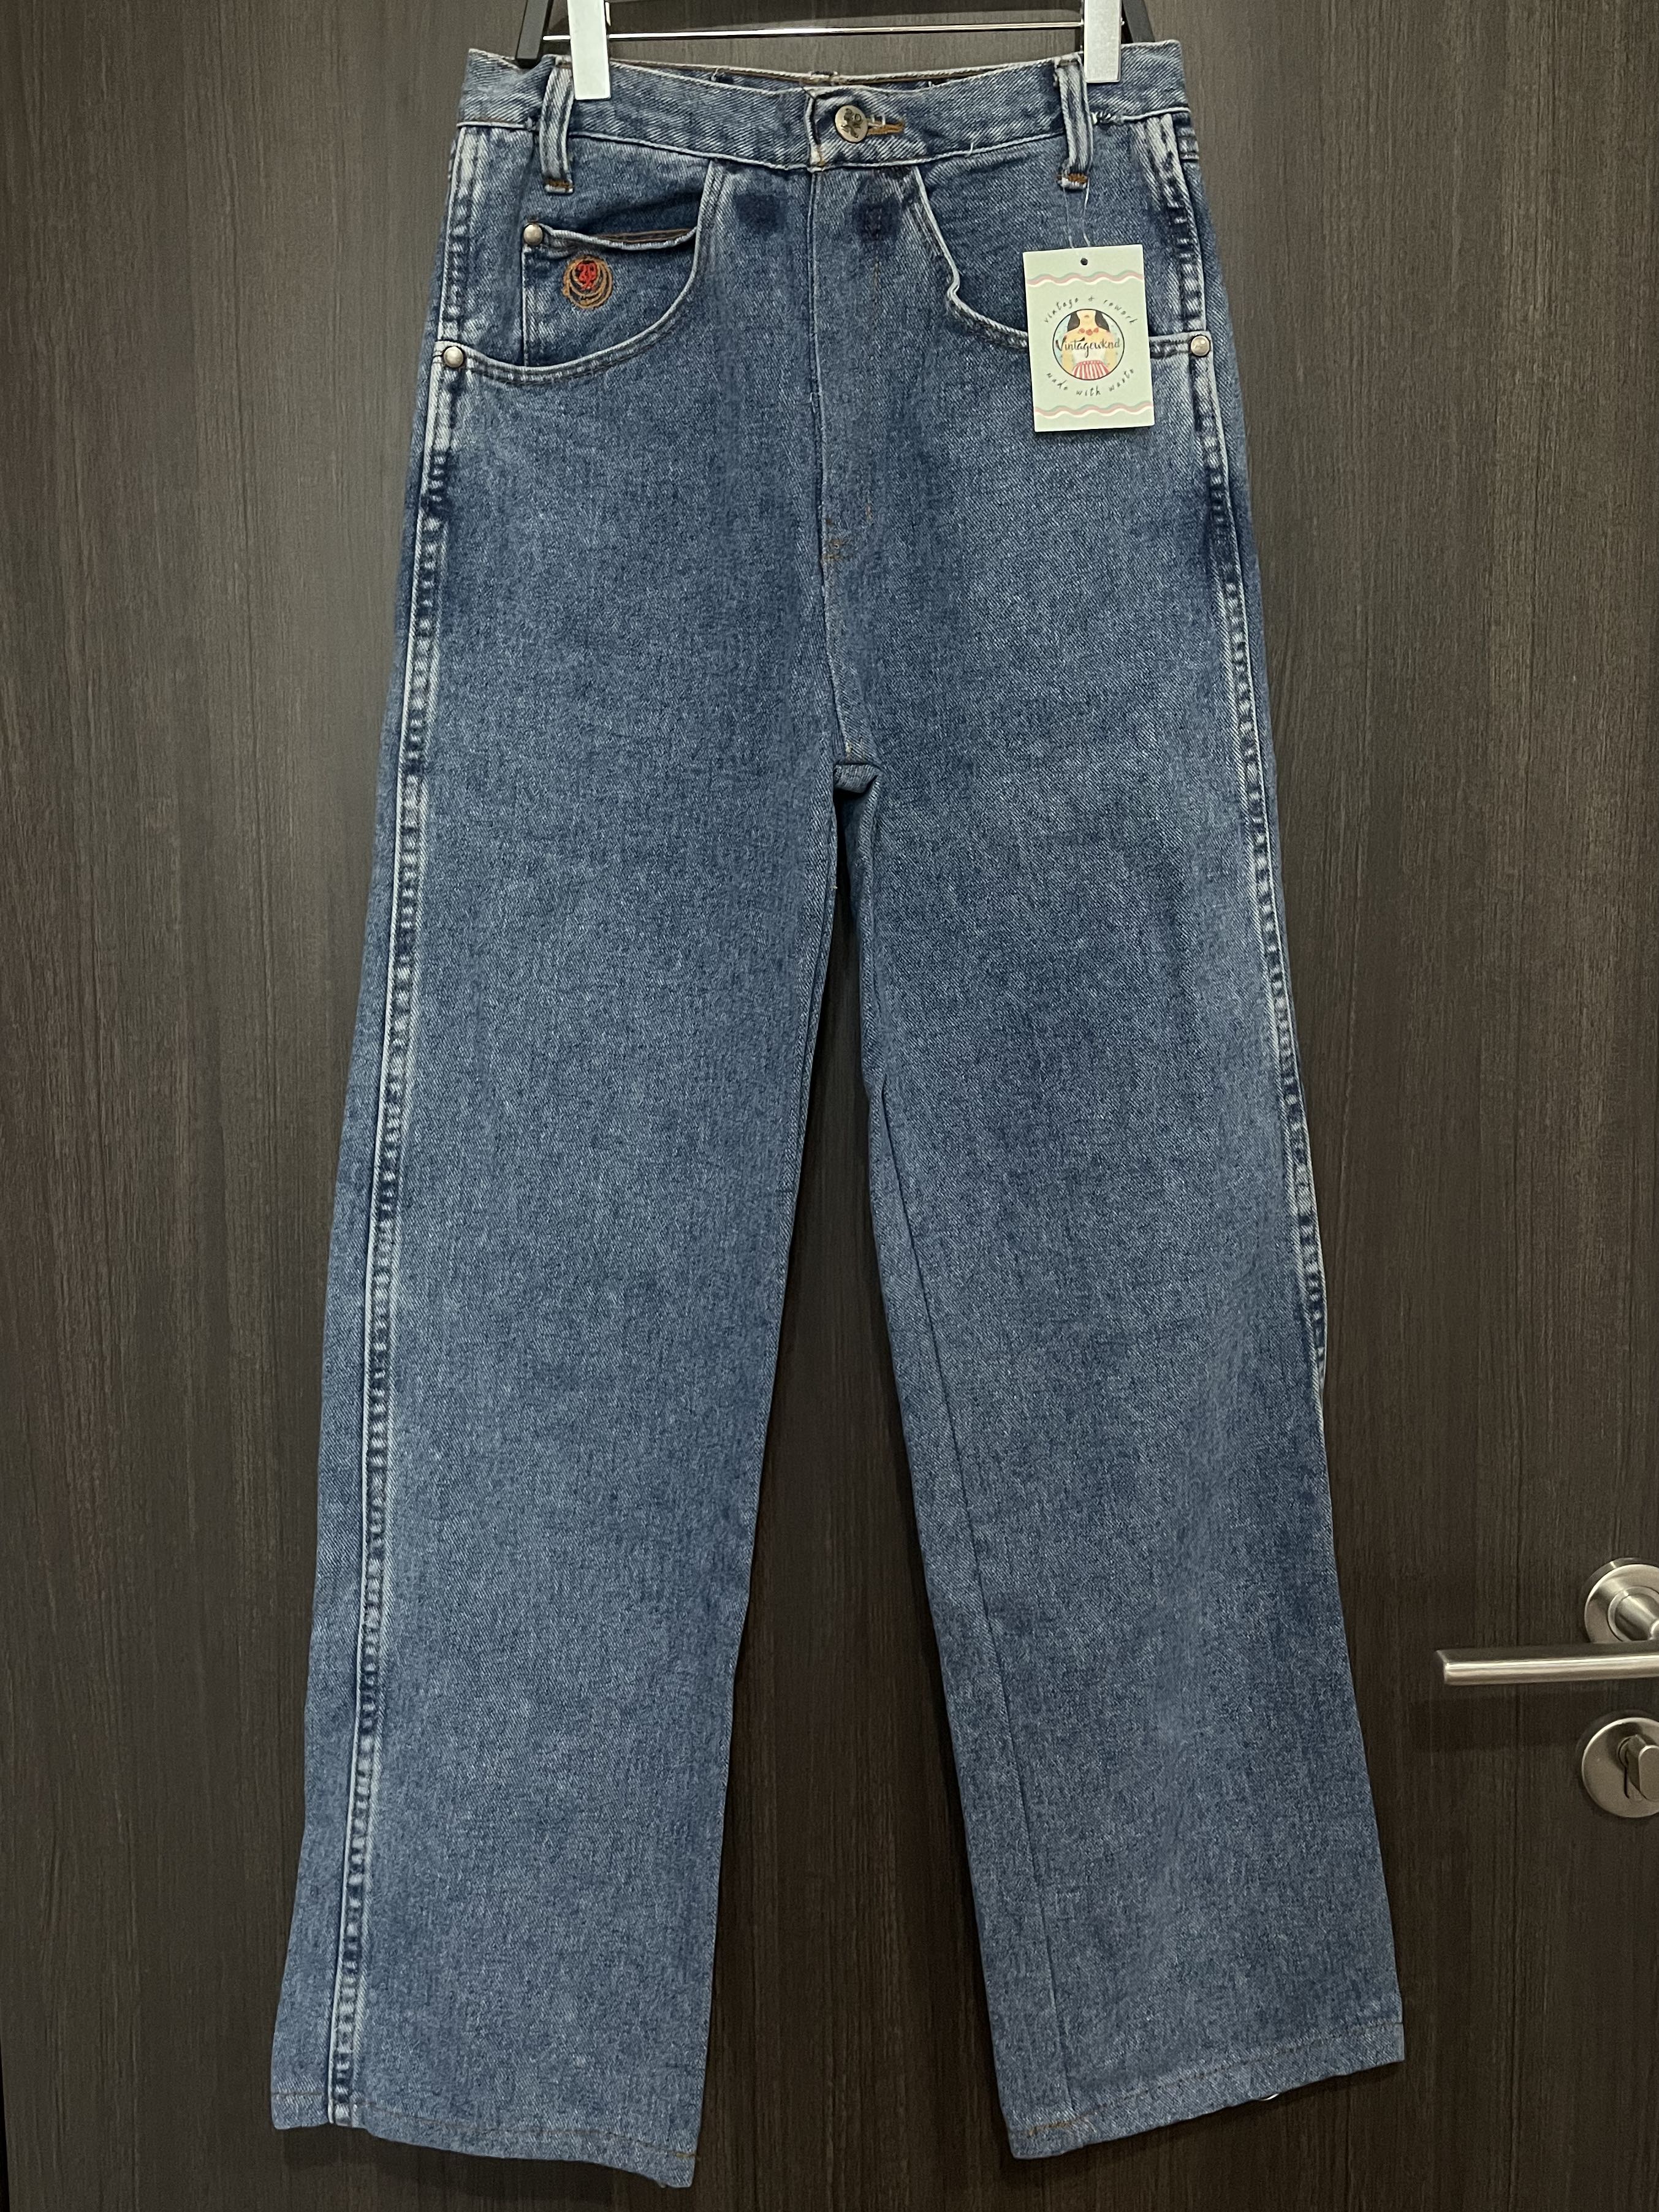 Vintagewknd Denim Jeans (vintage), Women's Fashion, Bottoms, Jeans ...